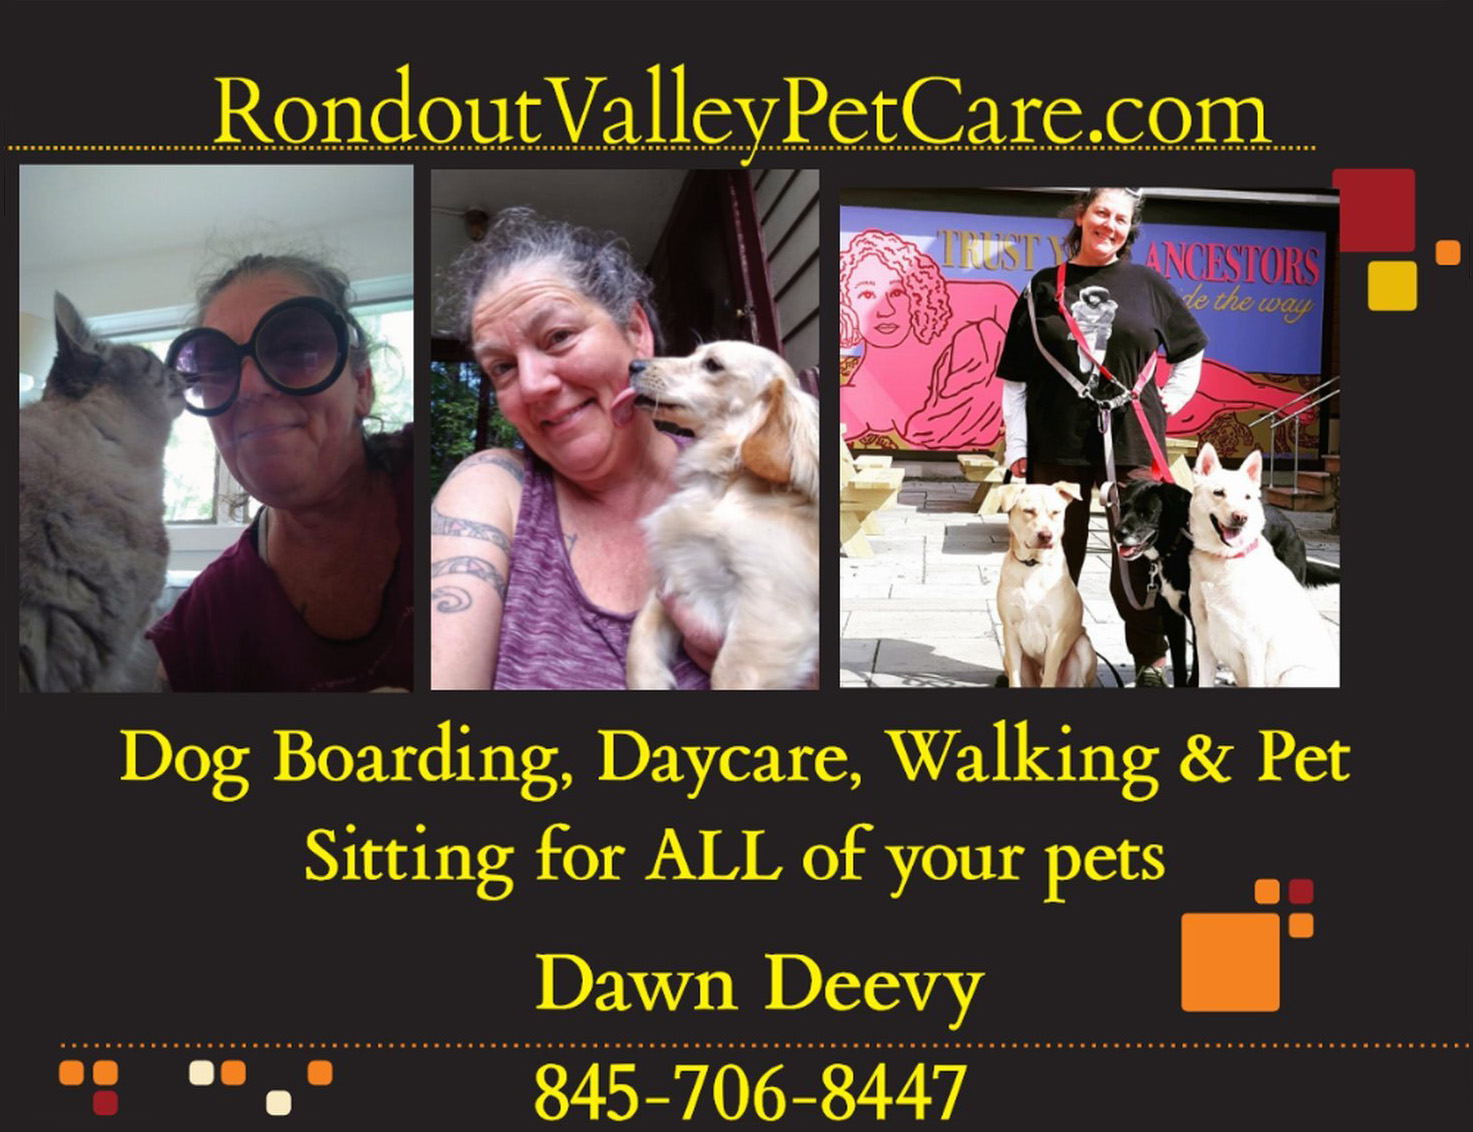 Rondout Valley Pet Care